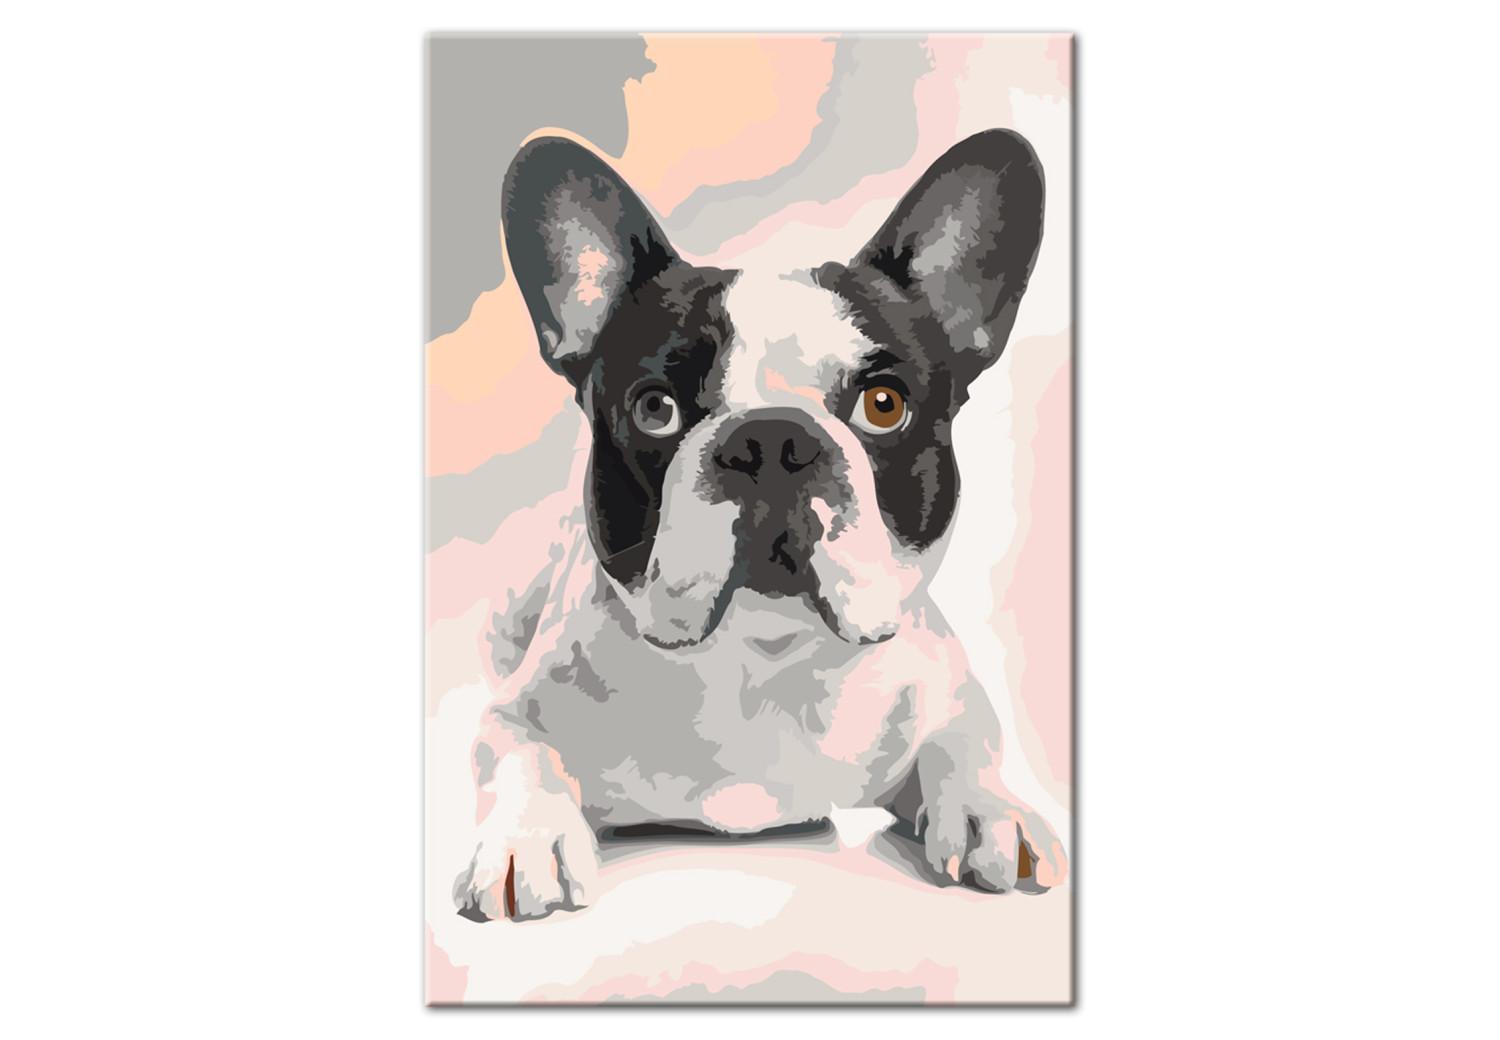 Cuadro numerado para pintar Bulldog francés